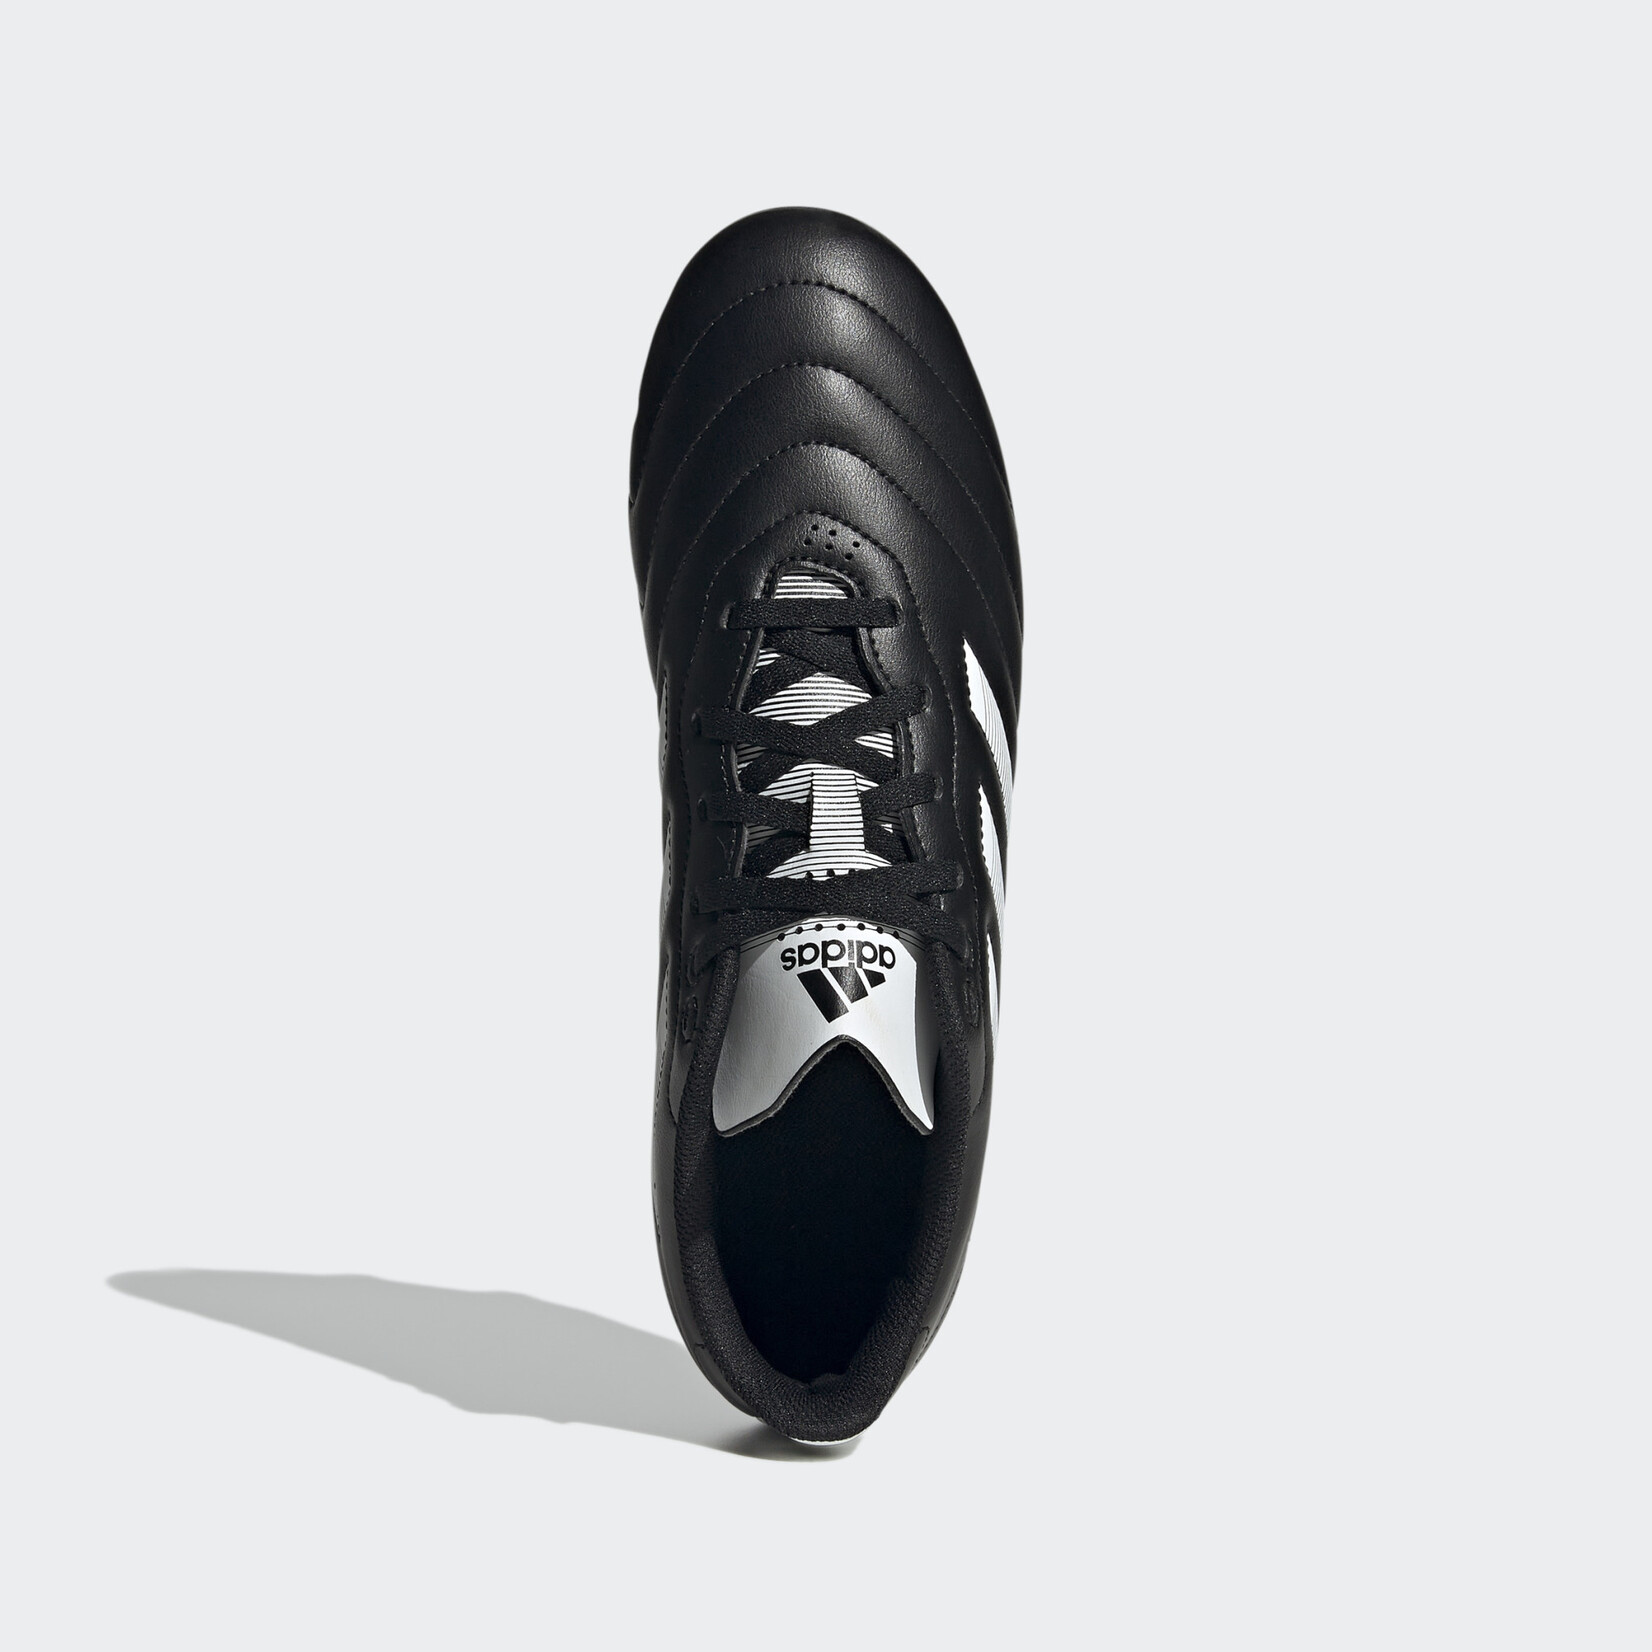 Adidas Goletto VIII Firm Ground Boots Black/White